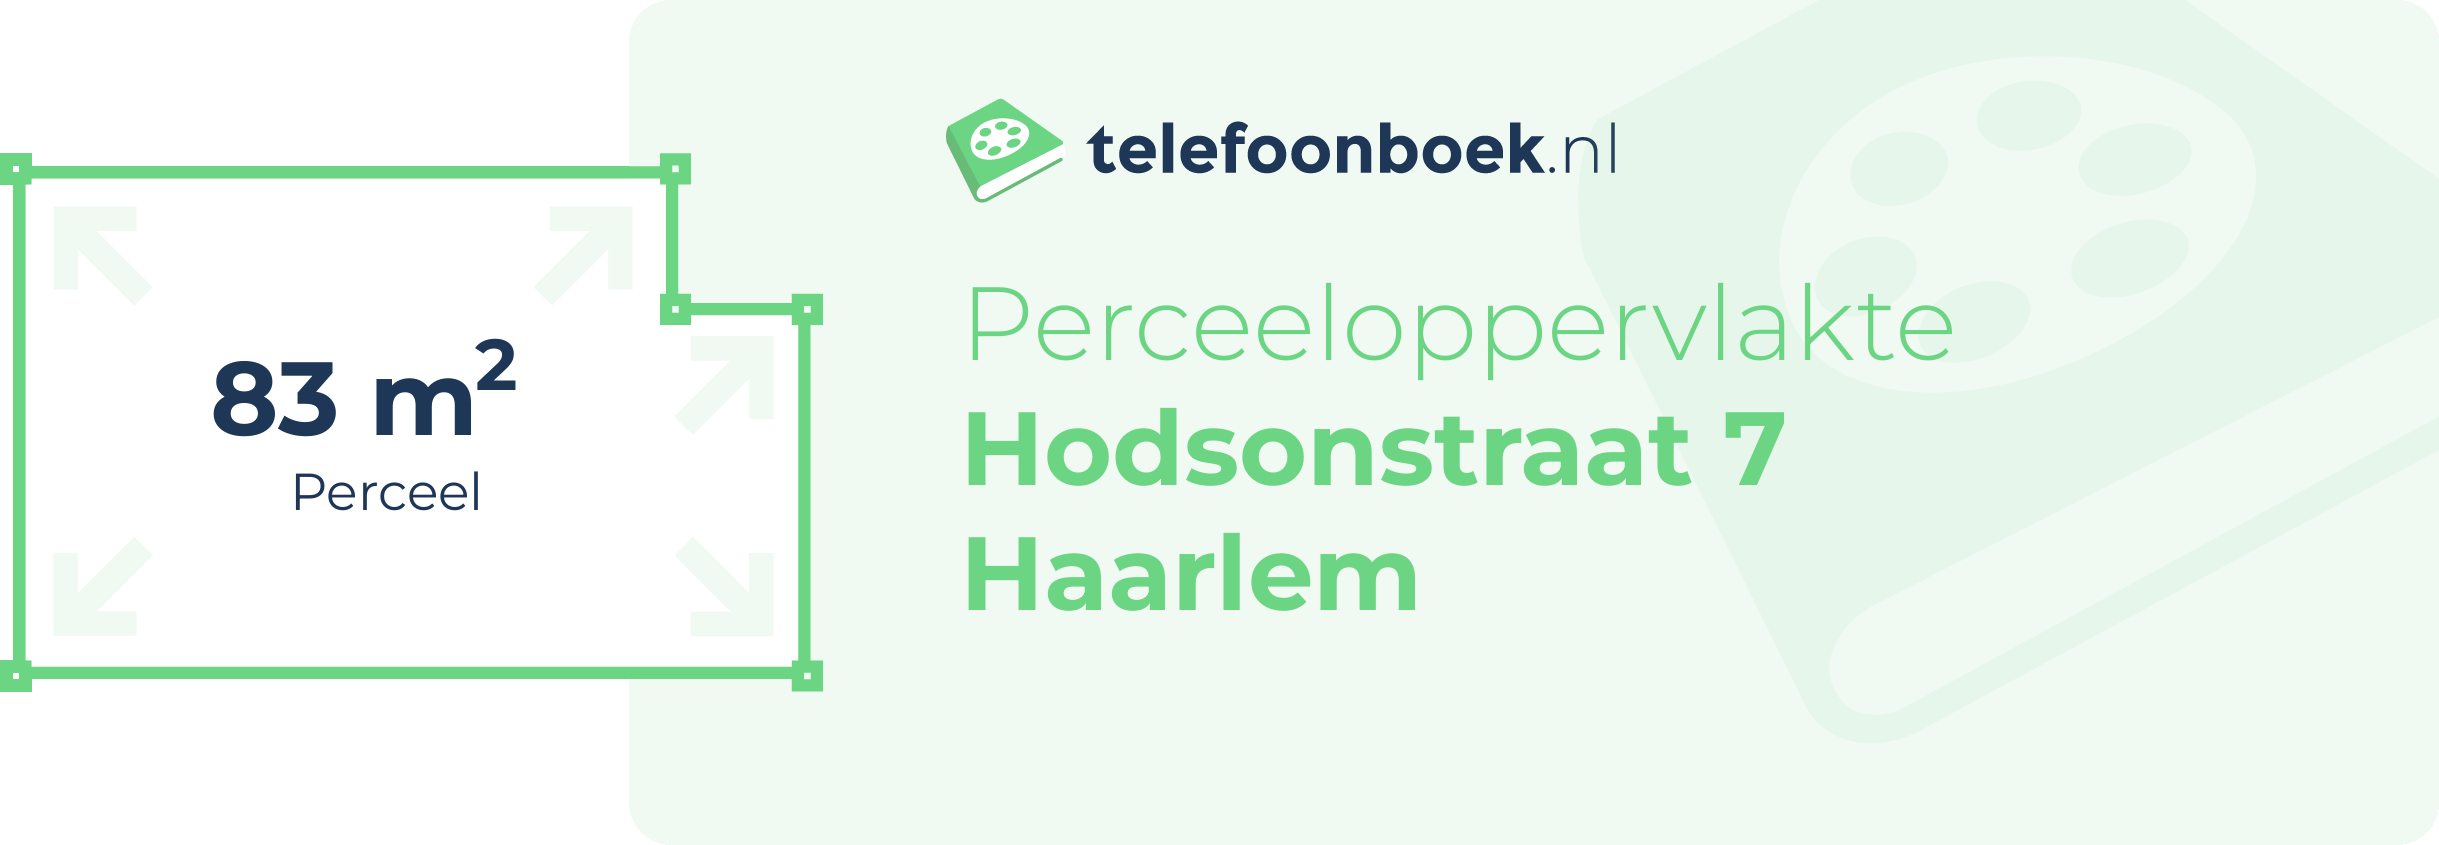 Perceeloppervlakte Hodsonstraat 7 Haarlem